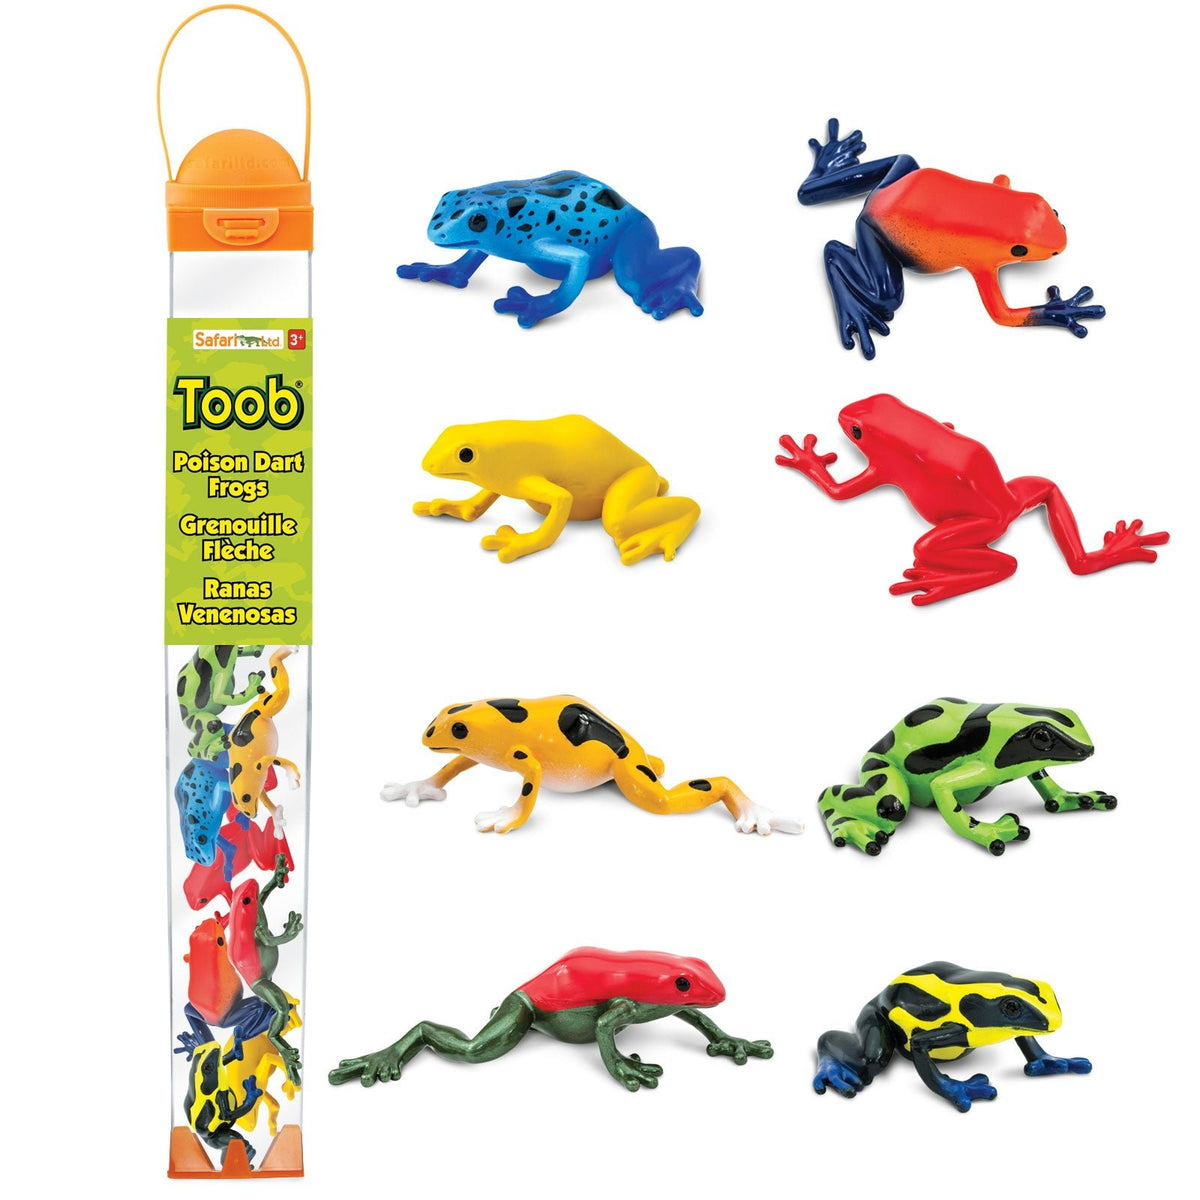 Safari Ltd. Poison Dart Frogs Toob